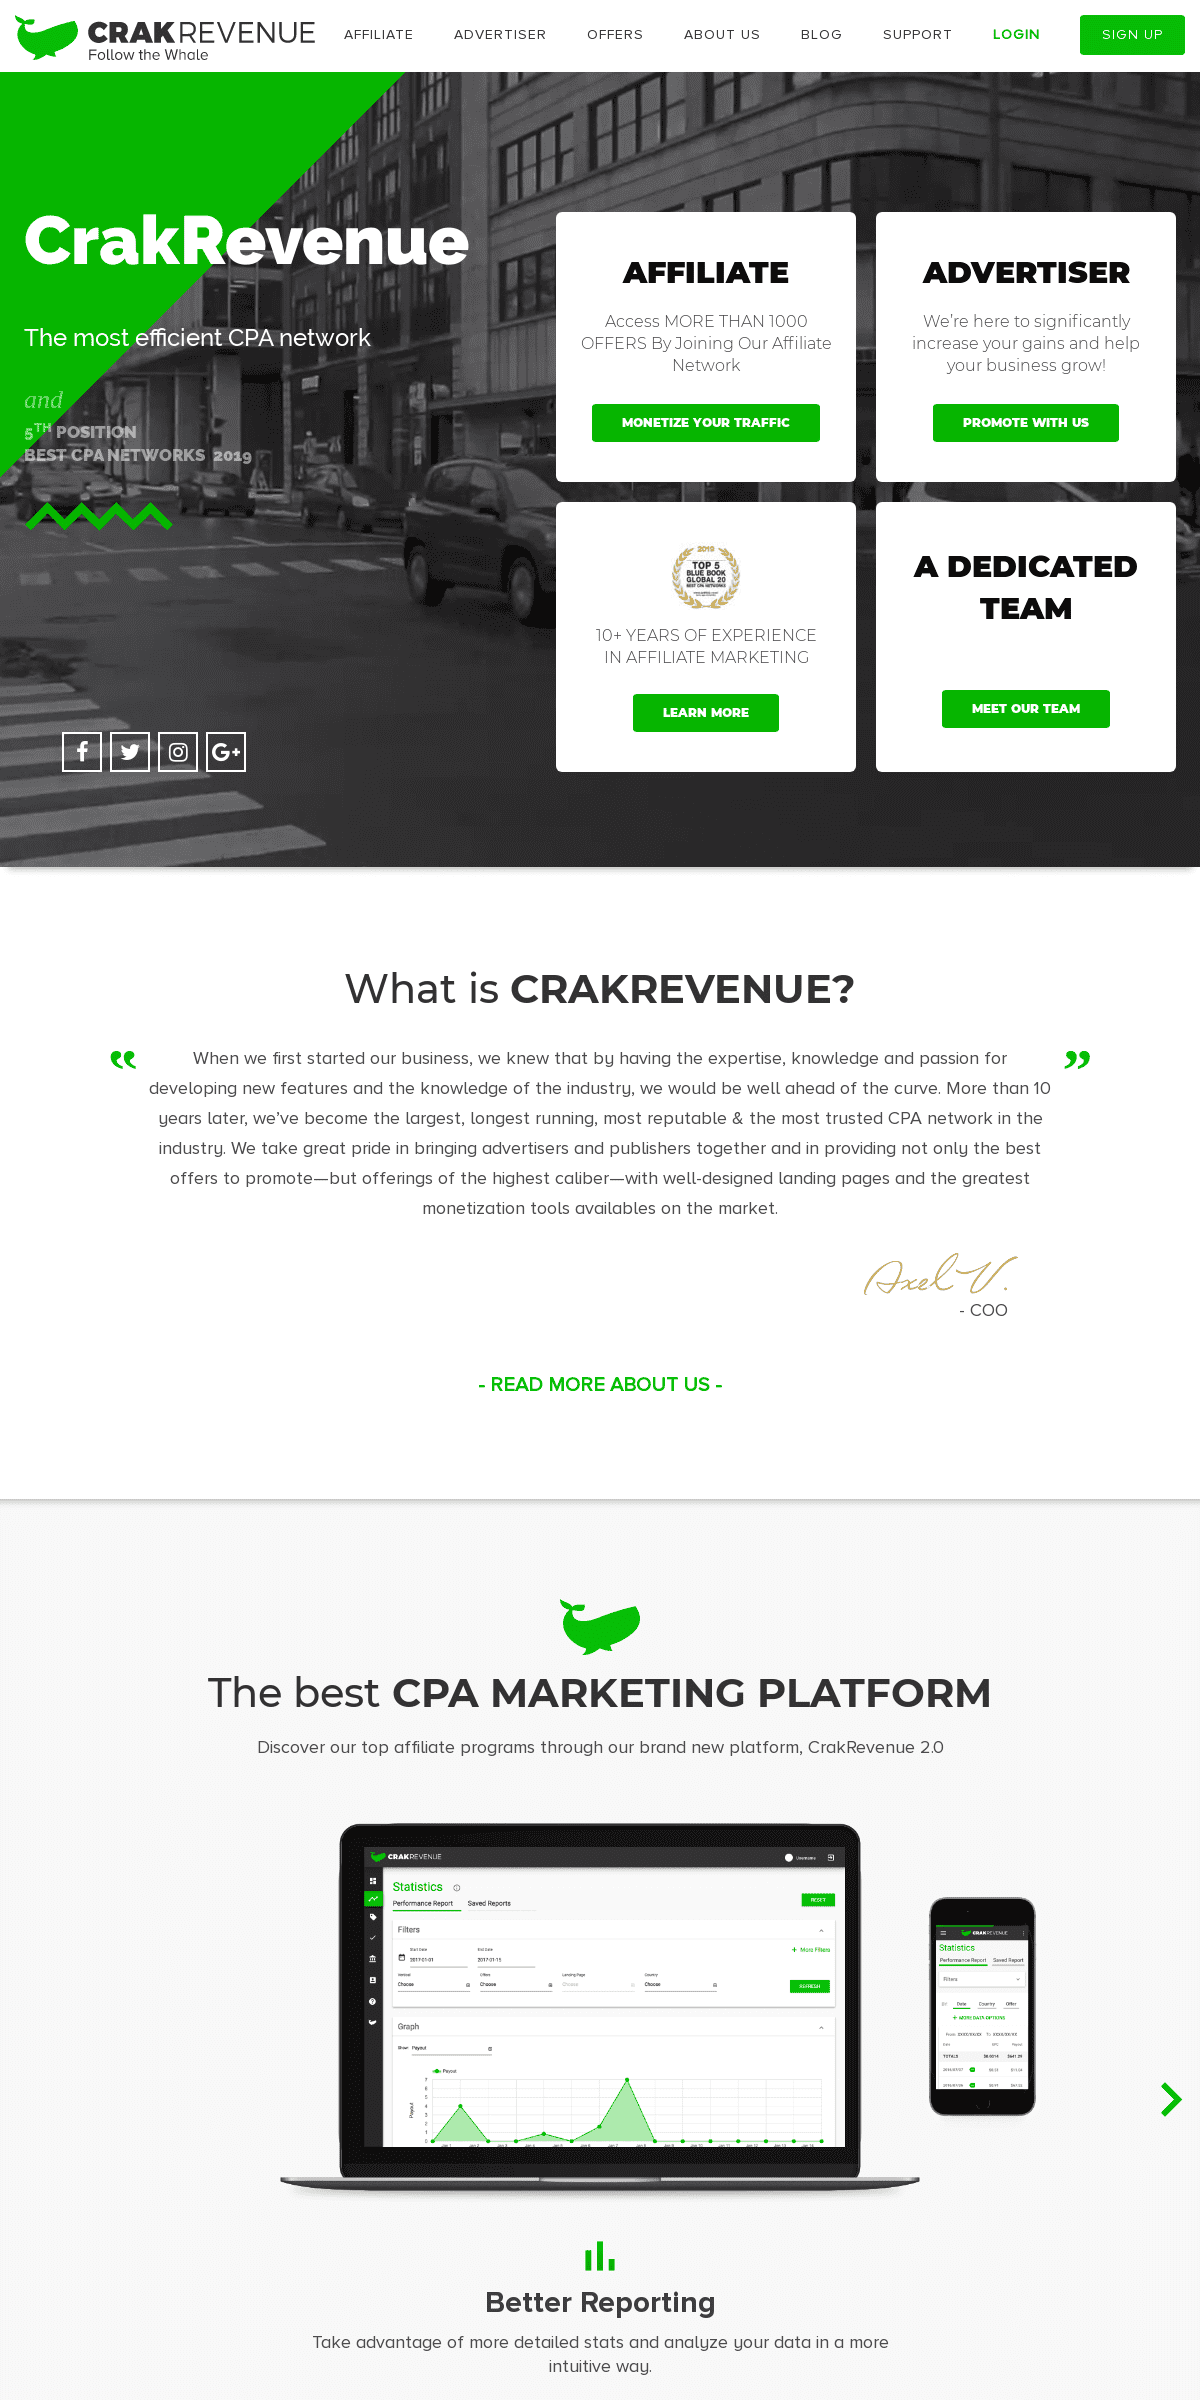 A complete backup of crakrevenue.com